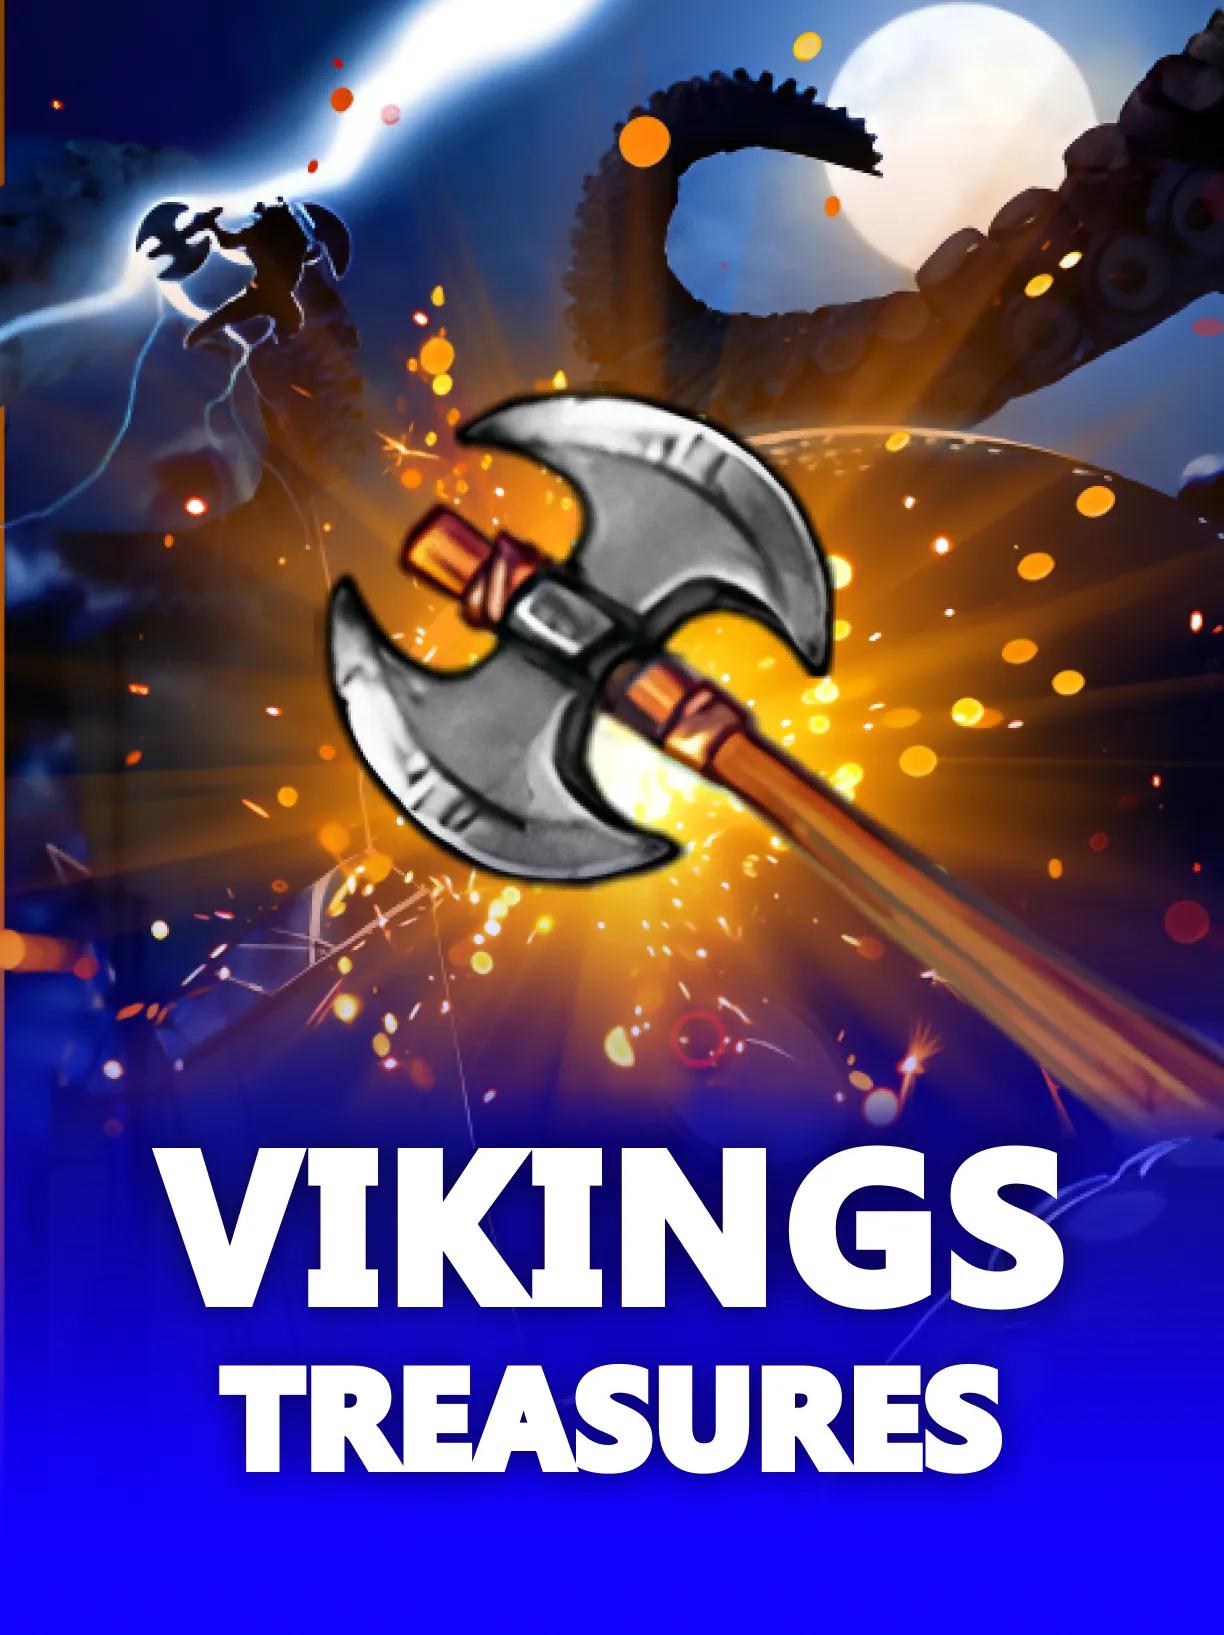 Vikings treasures